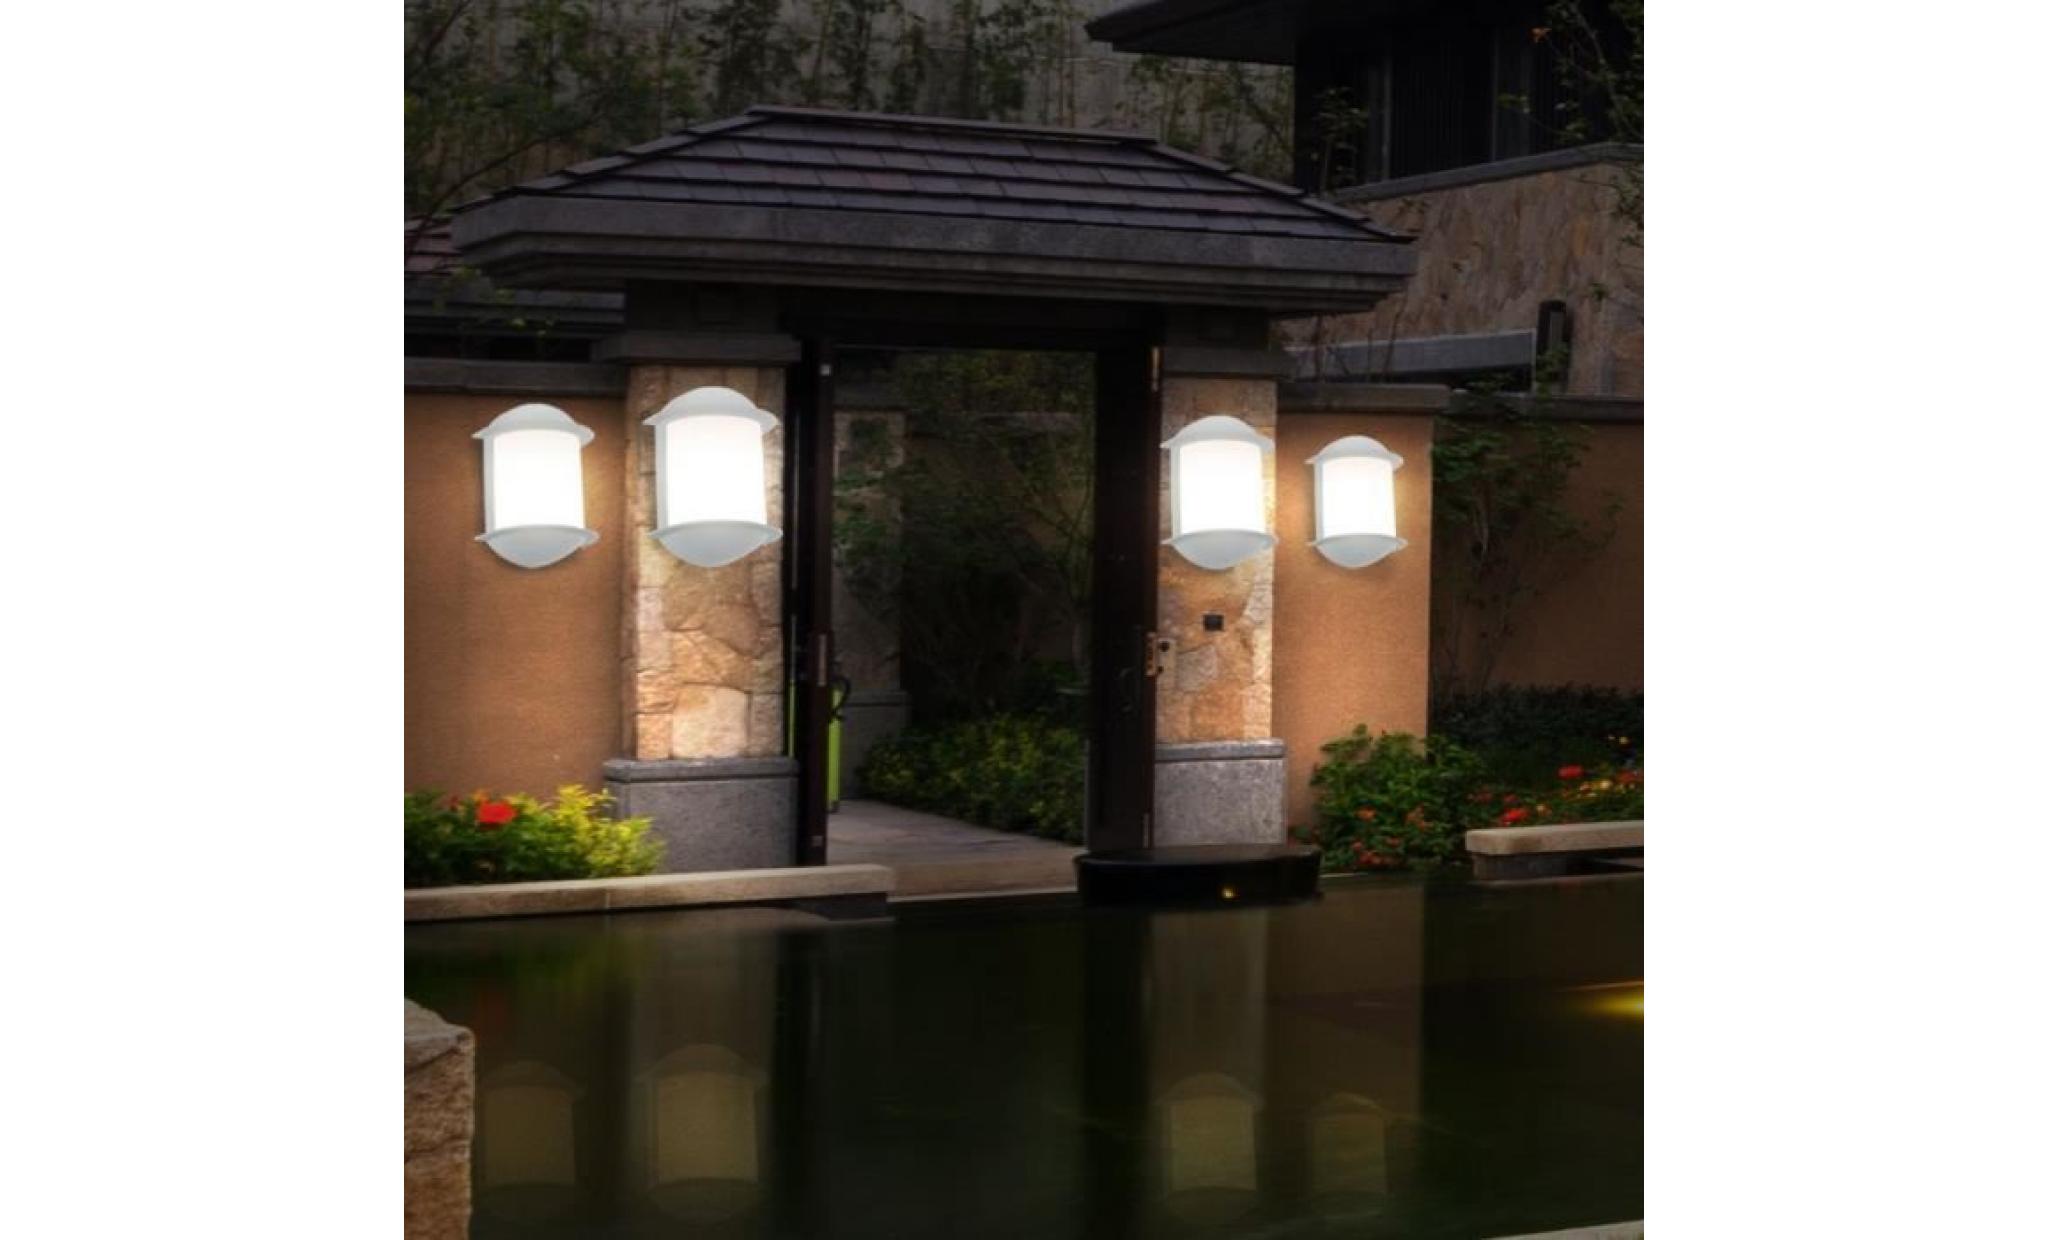 2 x applique led 7 watts luminaire mural lampe del jardin aluminium ip44 éclairage terrasse pas cher